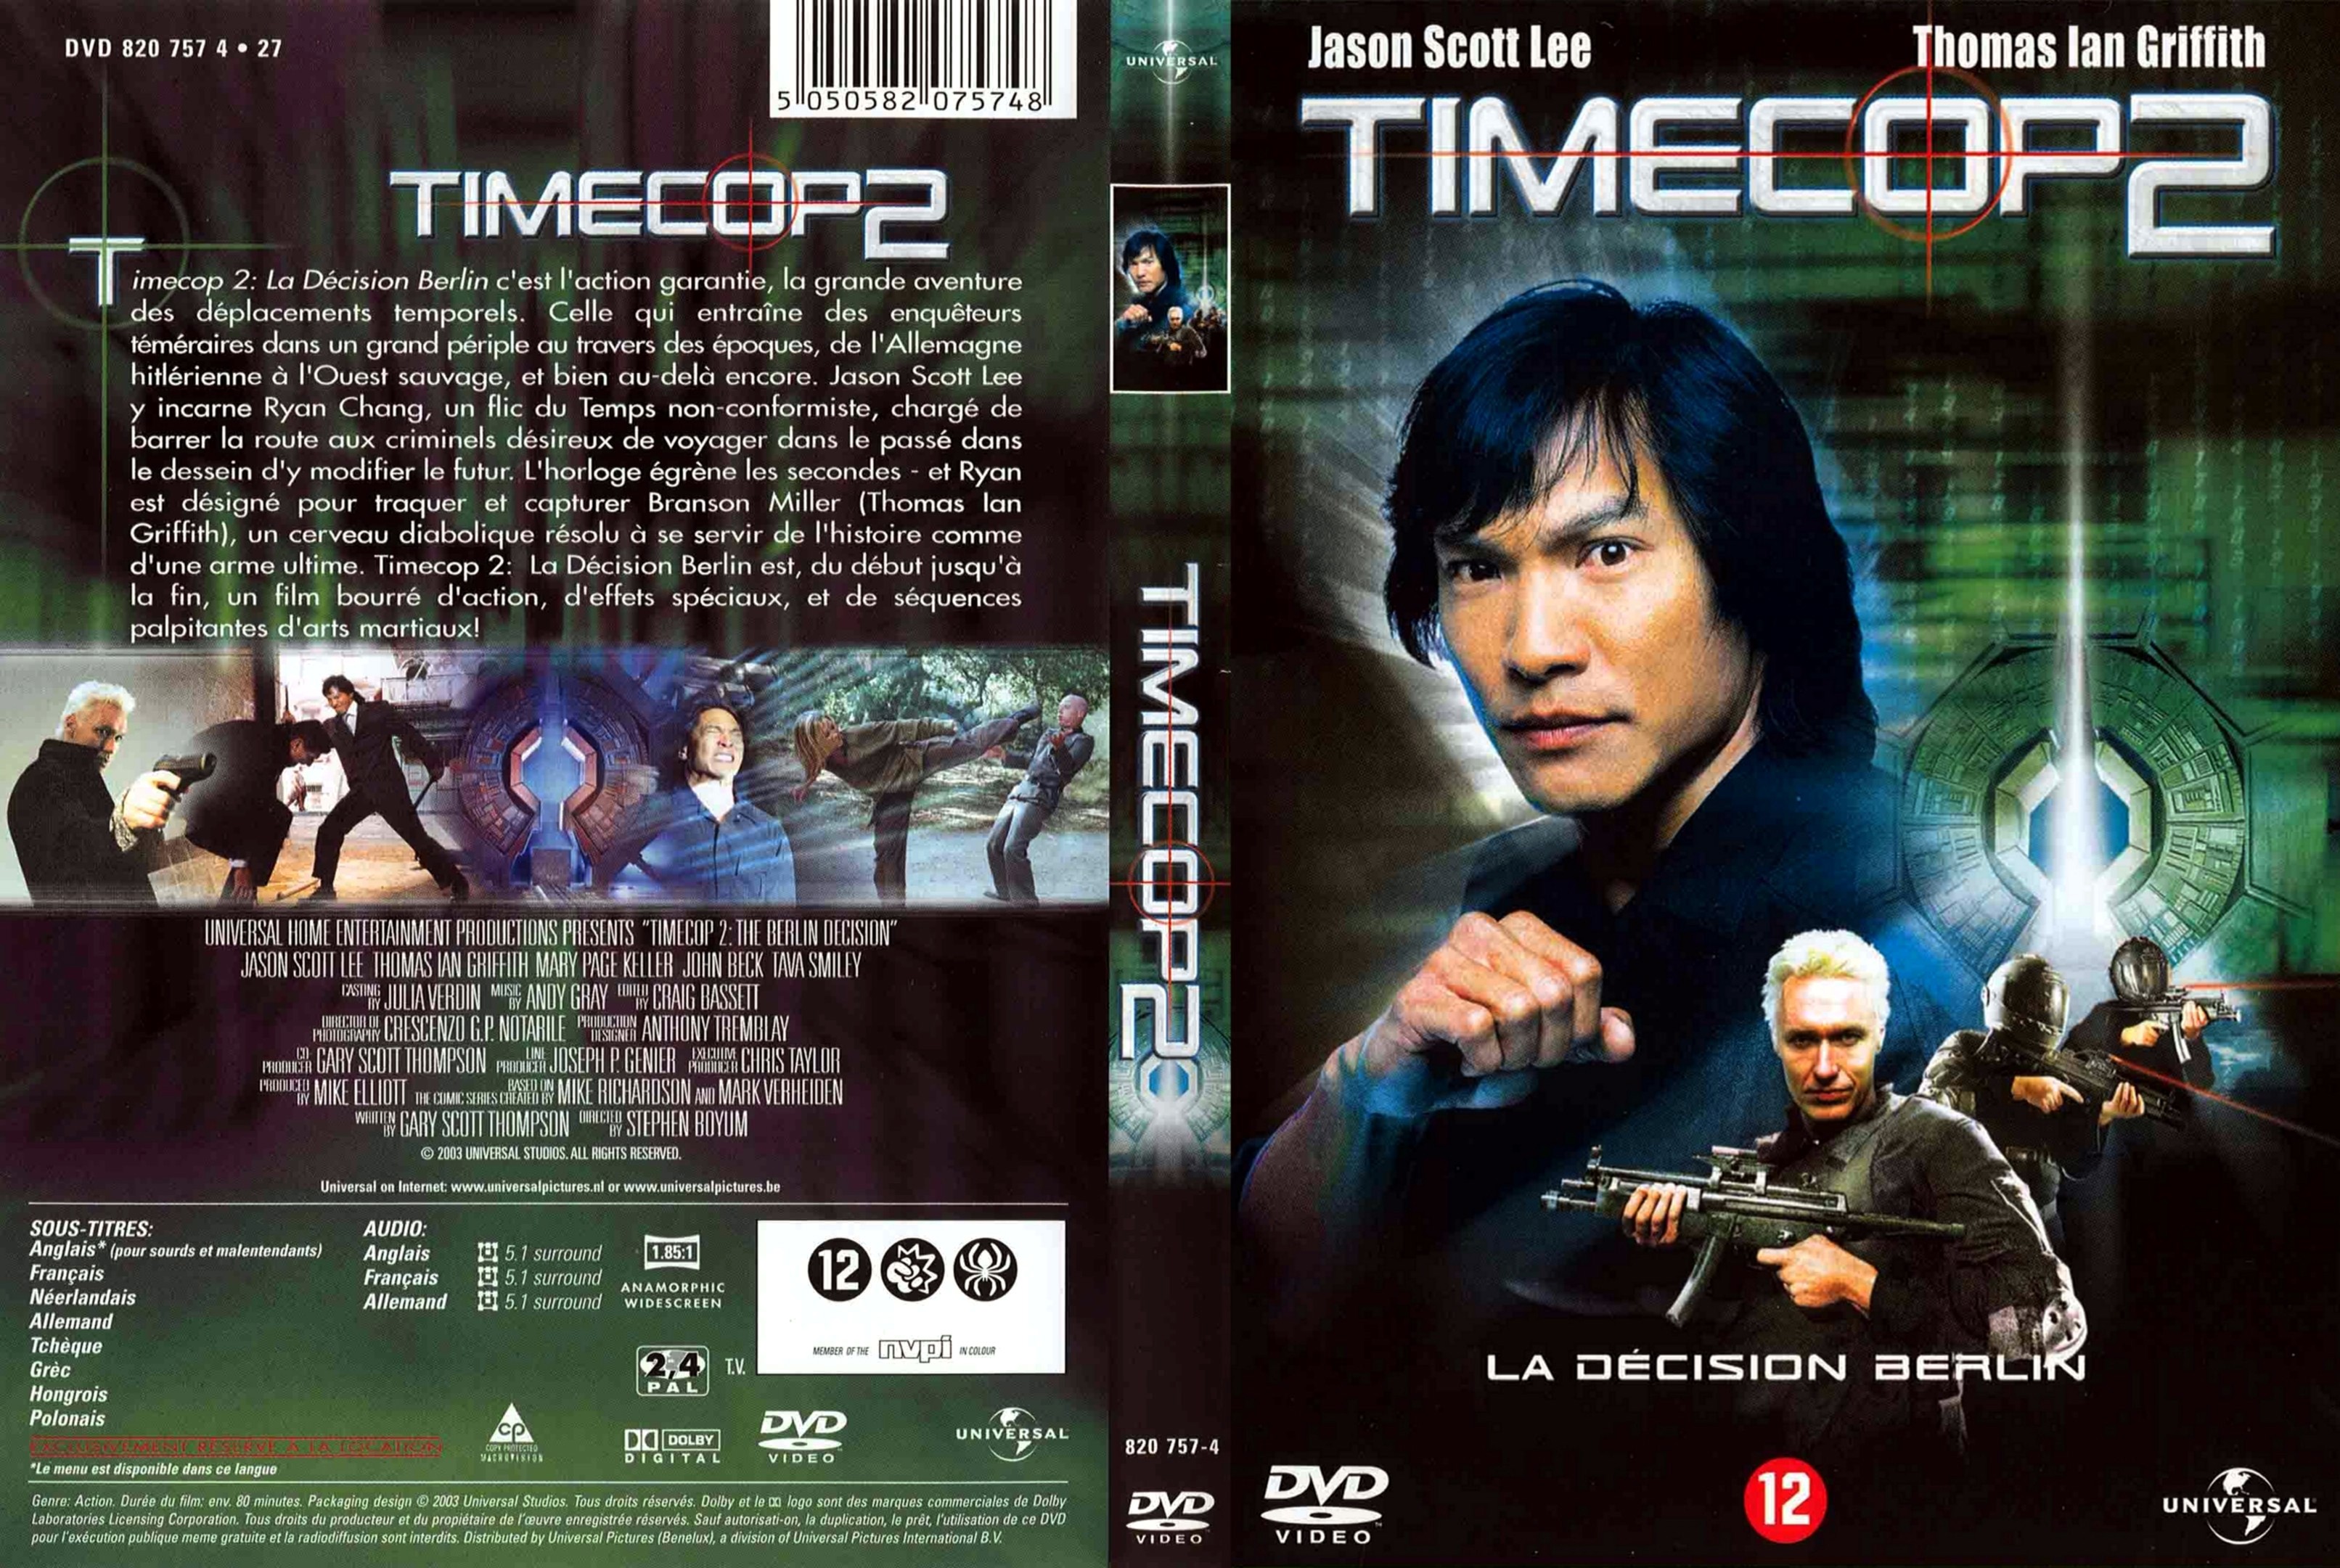 Jaquette DVD Timecop 2